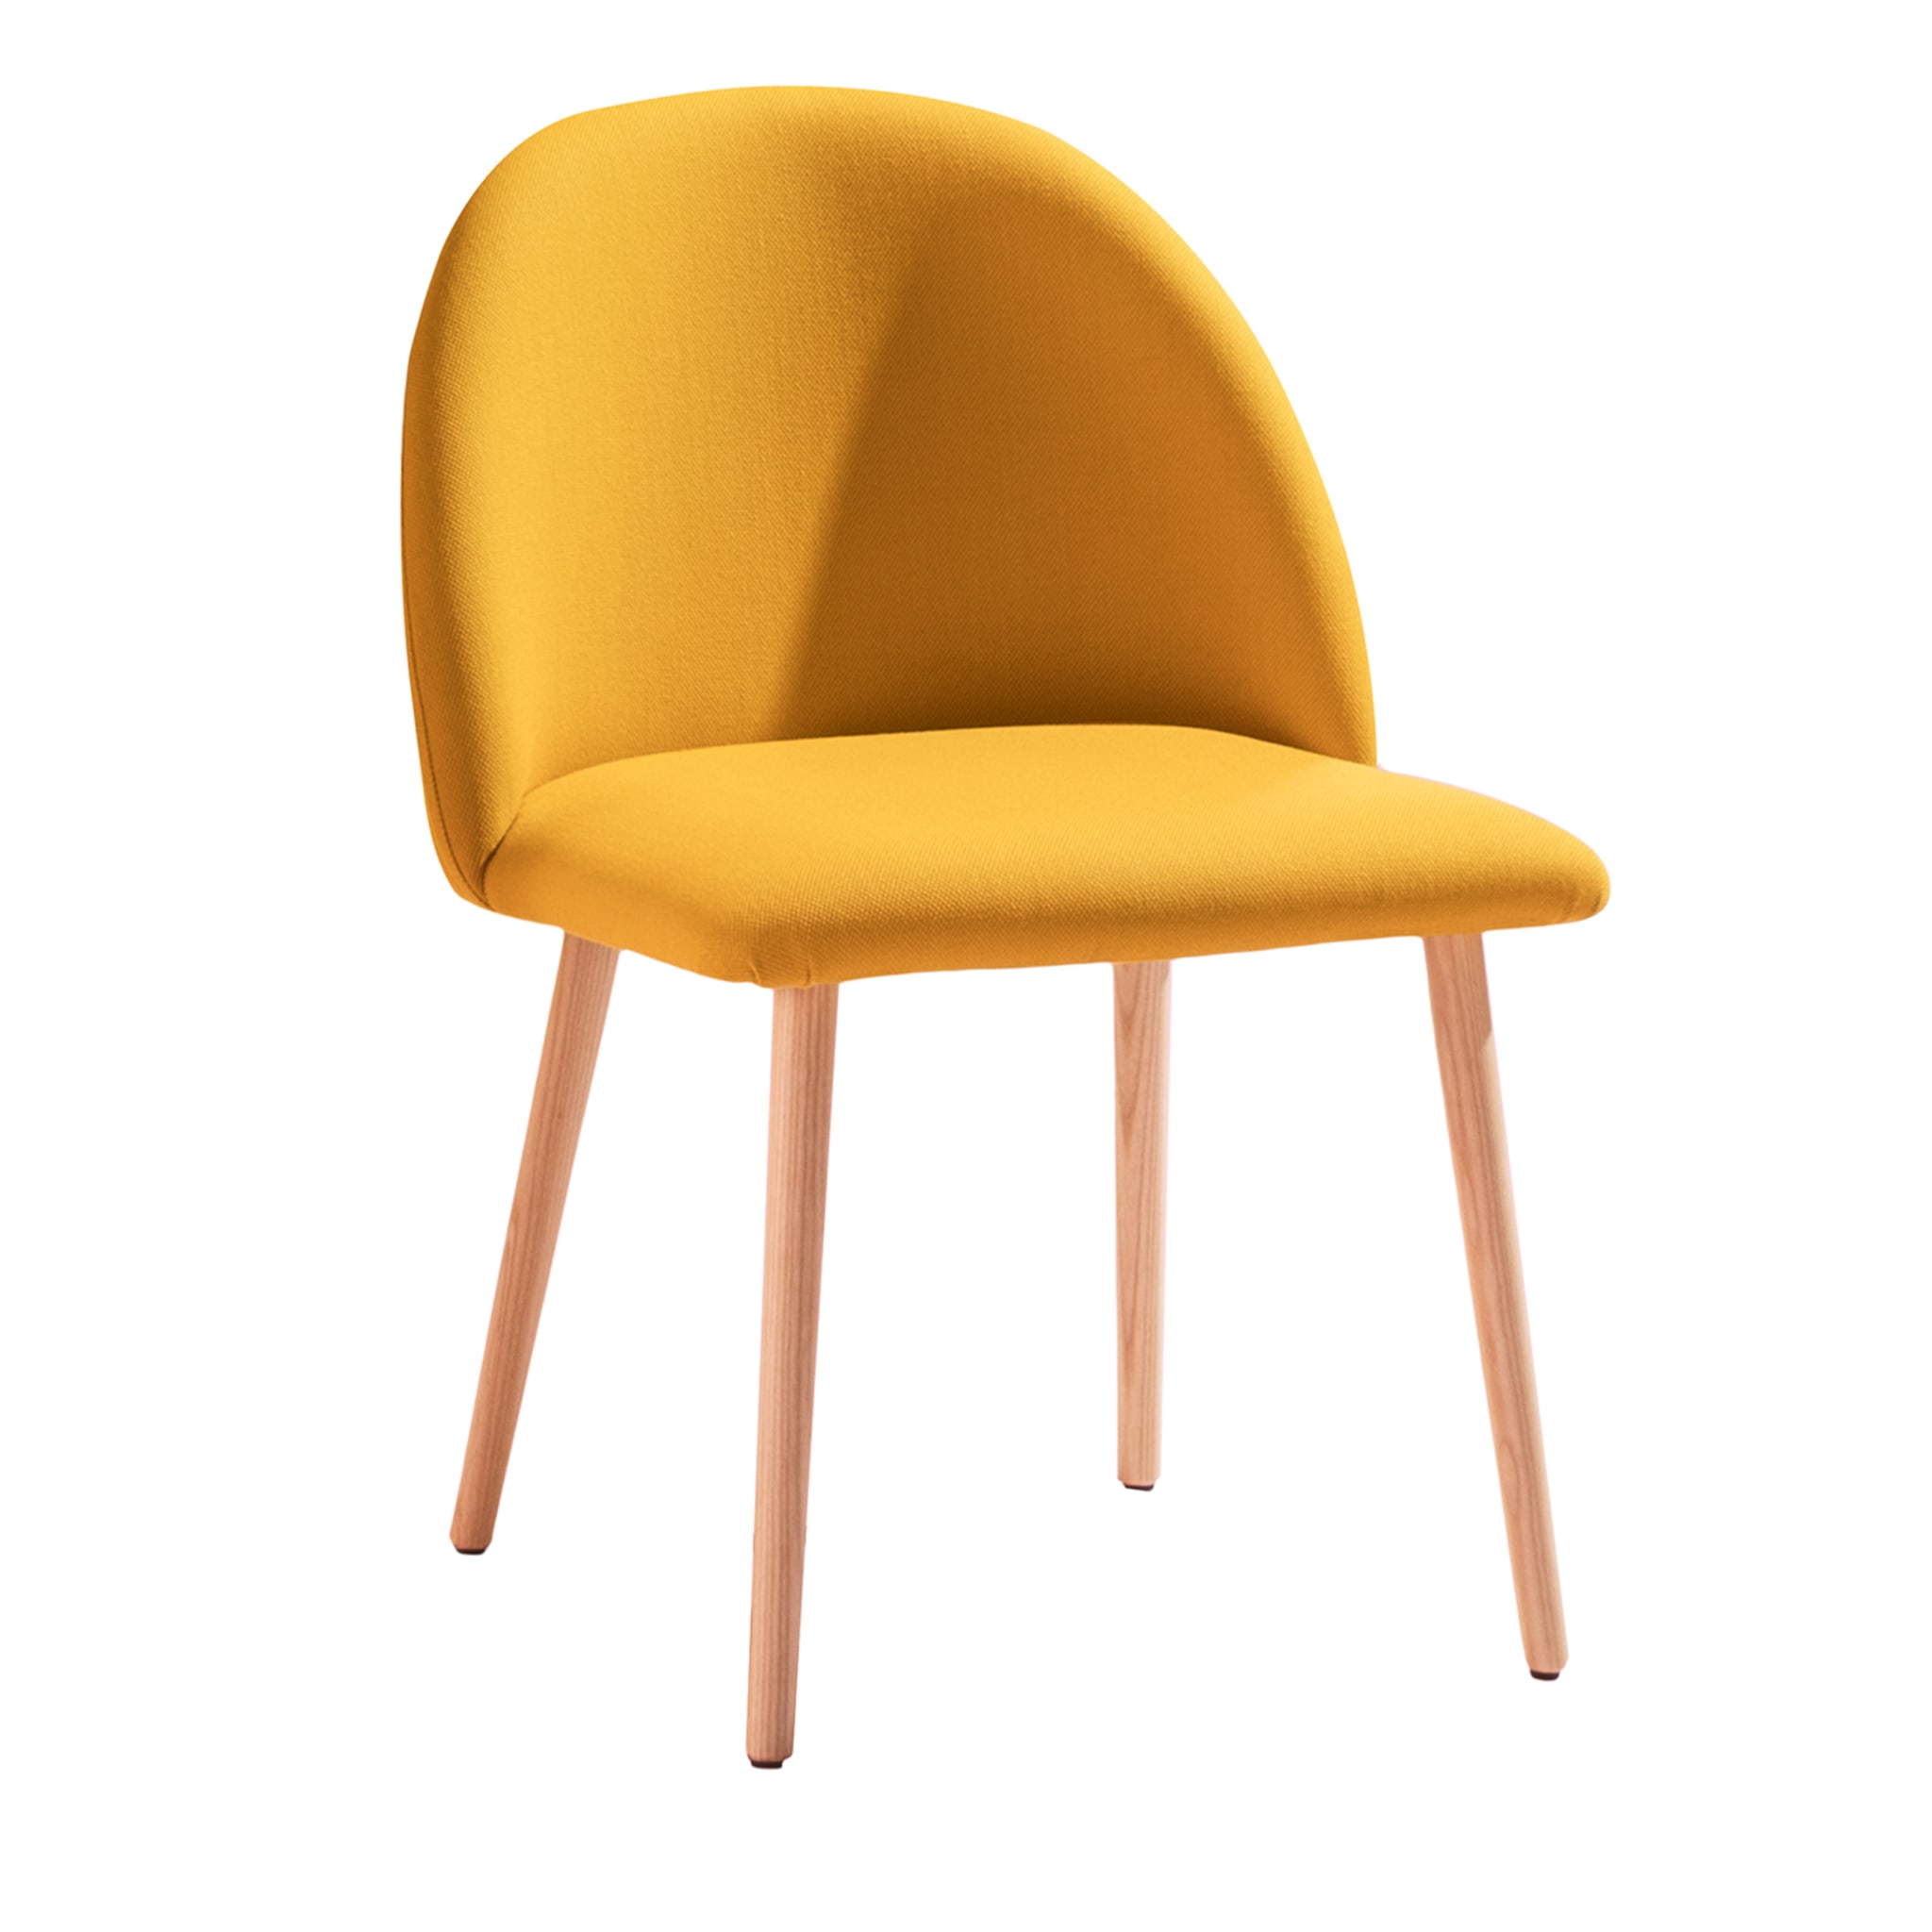 Bloom Yellow Chair #1 - Vista principal